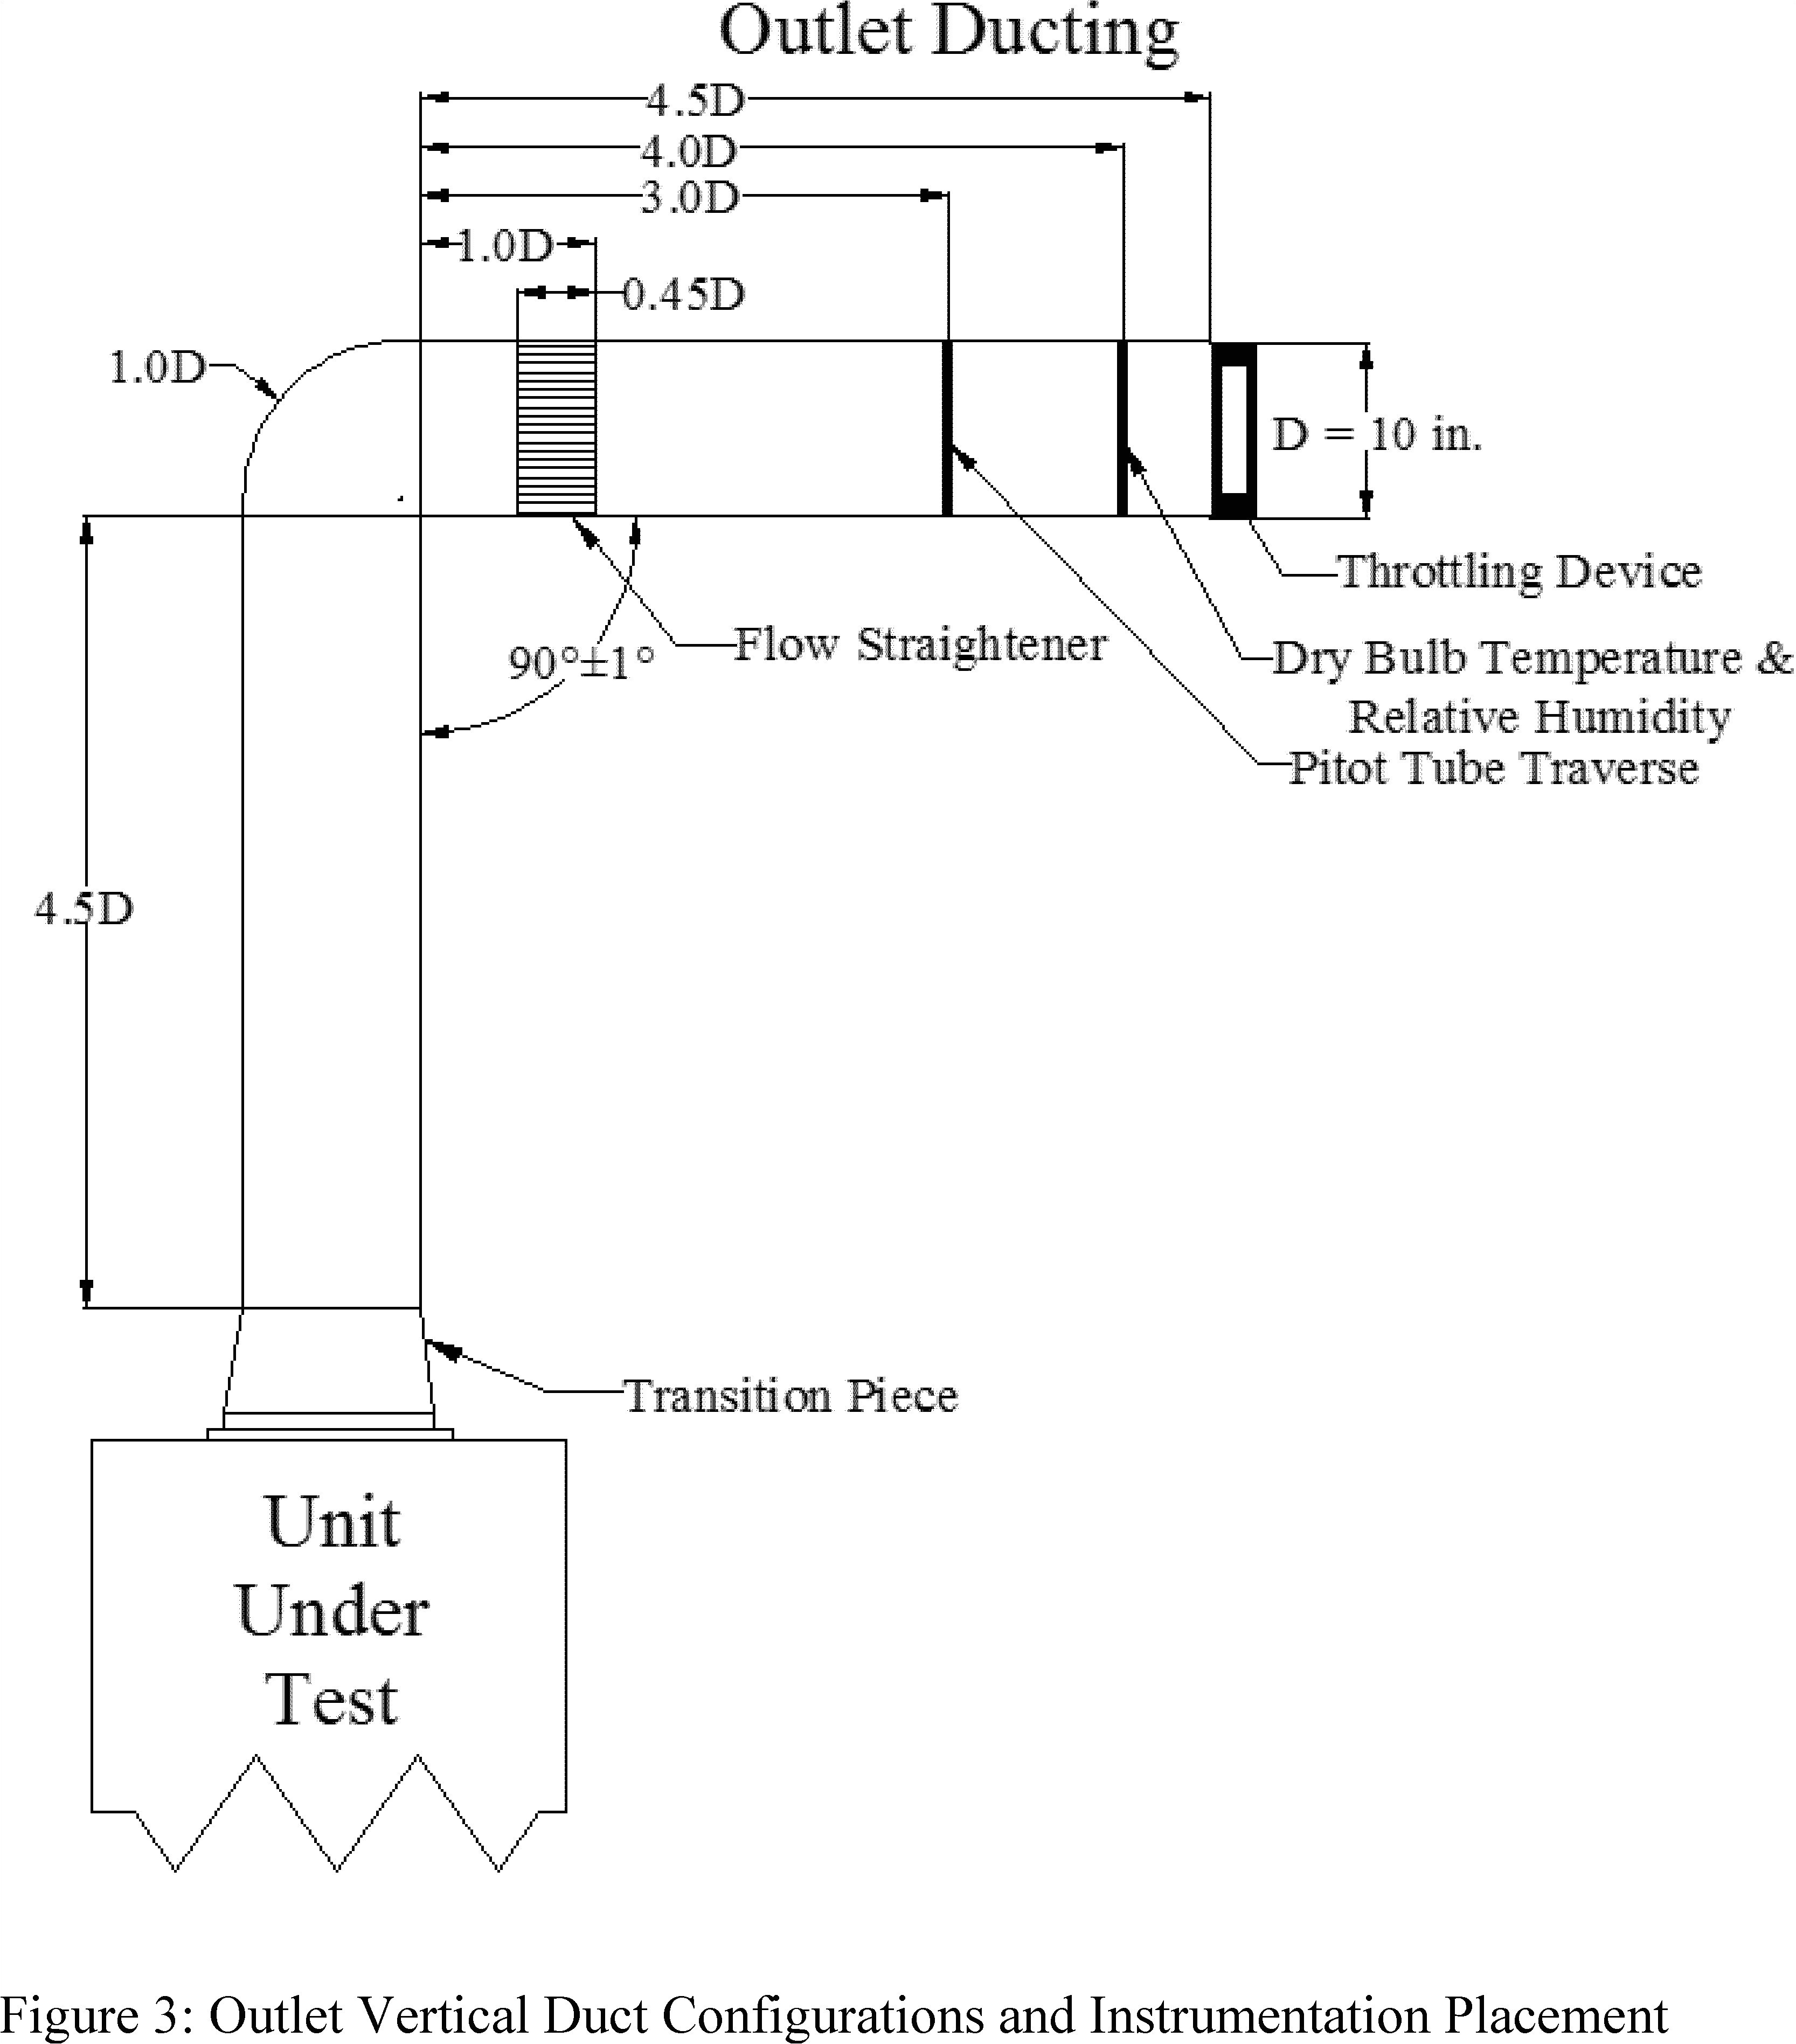 schematic plug wiring diagram dry wiring diagram reviewschematic plug wiring diagram dry wiring diagram show dry